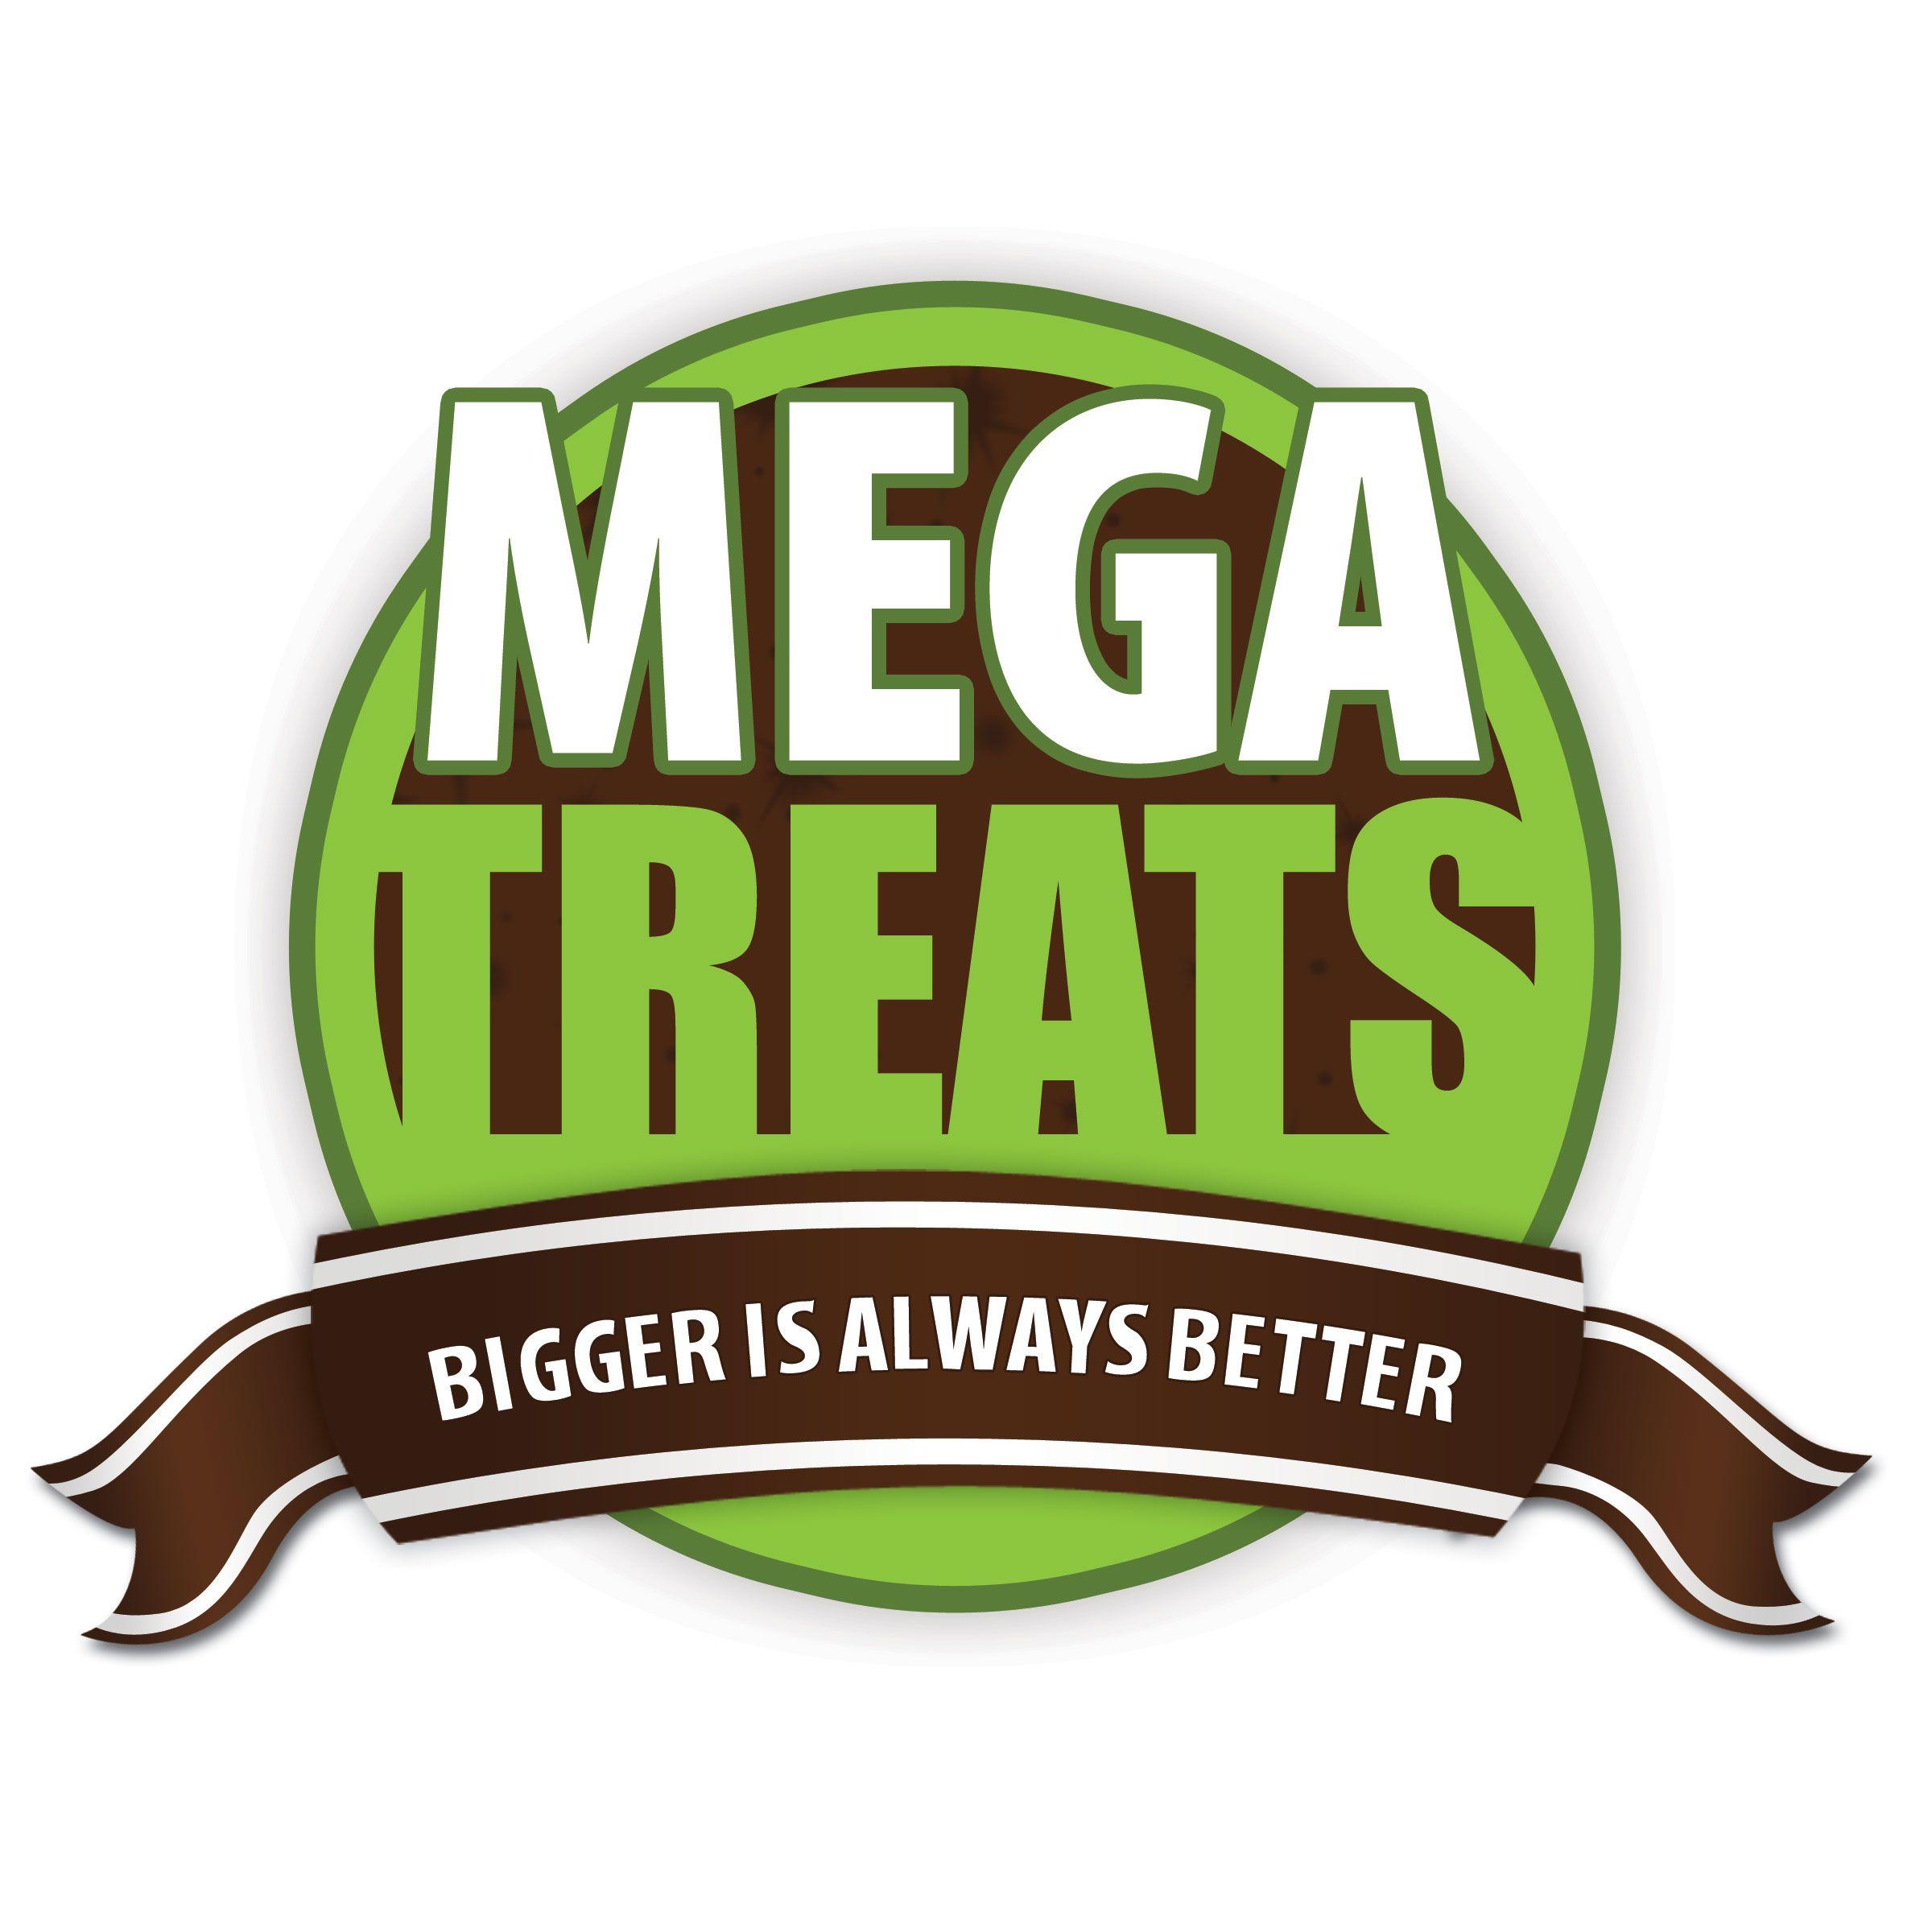 Hershey Ice Cream Logo - Hershey's Ice Cream MEGA Treats Logo. Portfolio